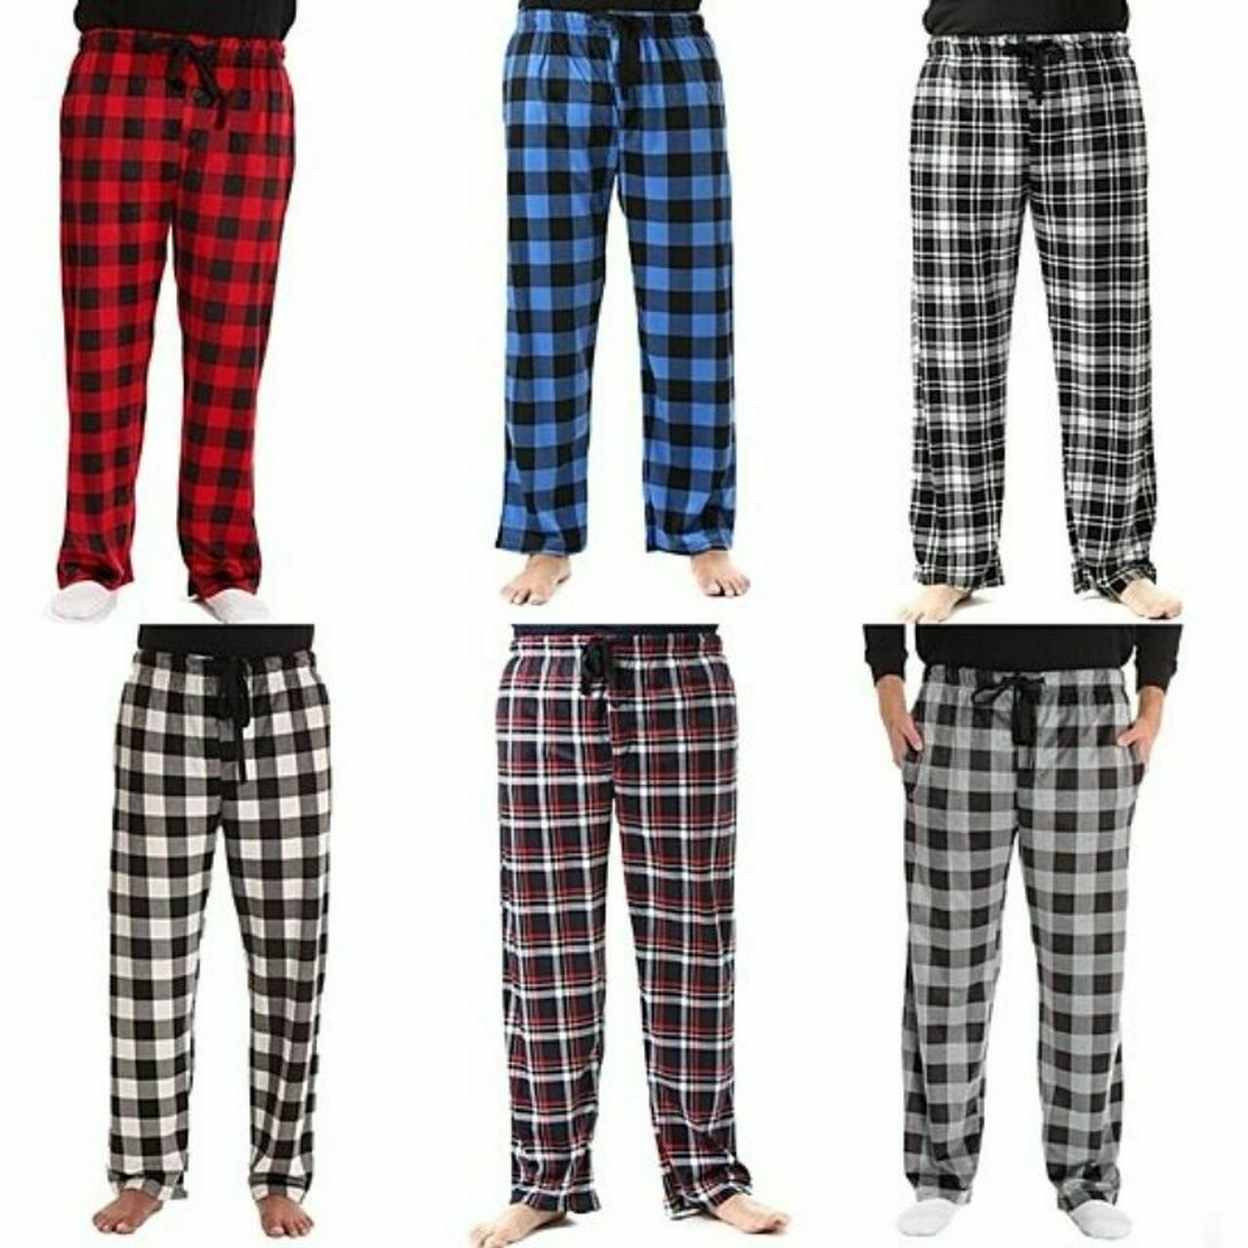 2-Pack: Men's Ultra Soft Cozy Flannel Fleece Plaid Pajama Sleep Bottom Lounge Pants - Red & Blue, Small